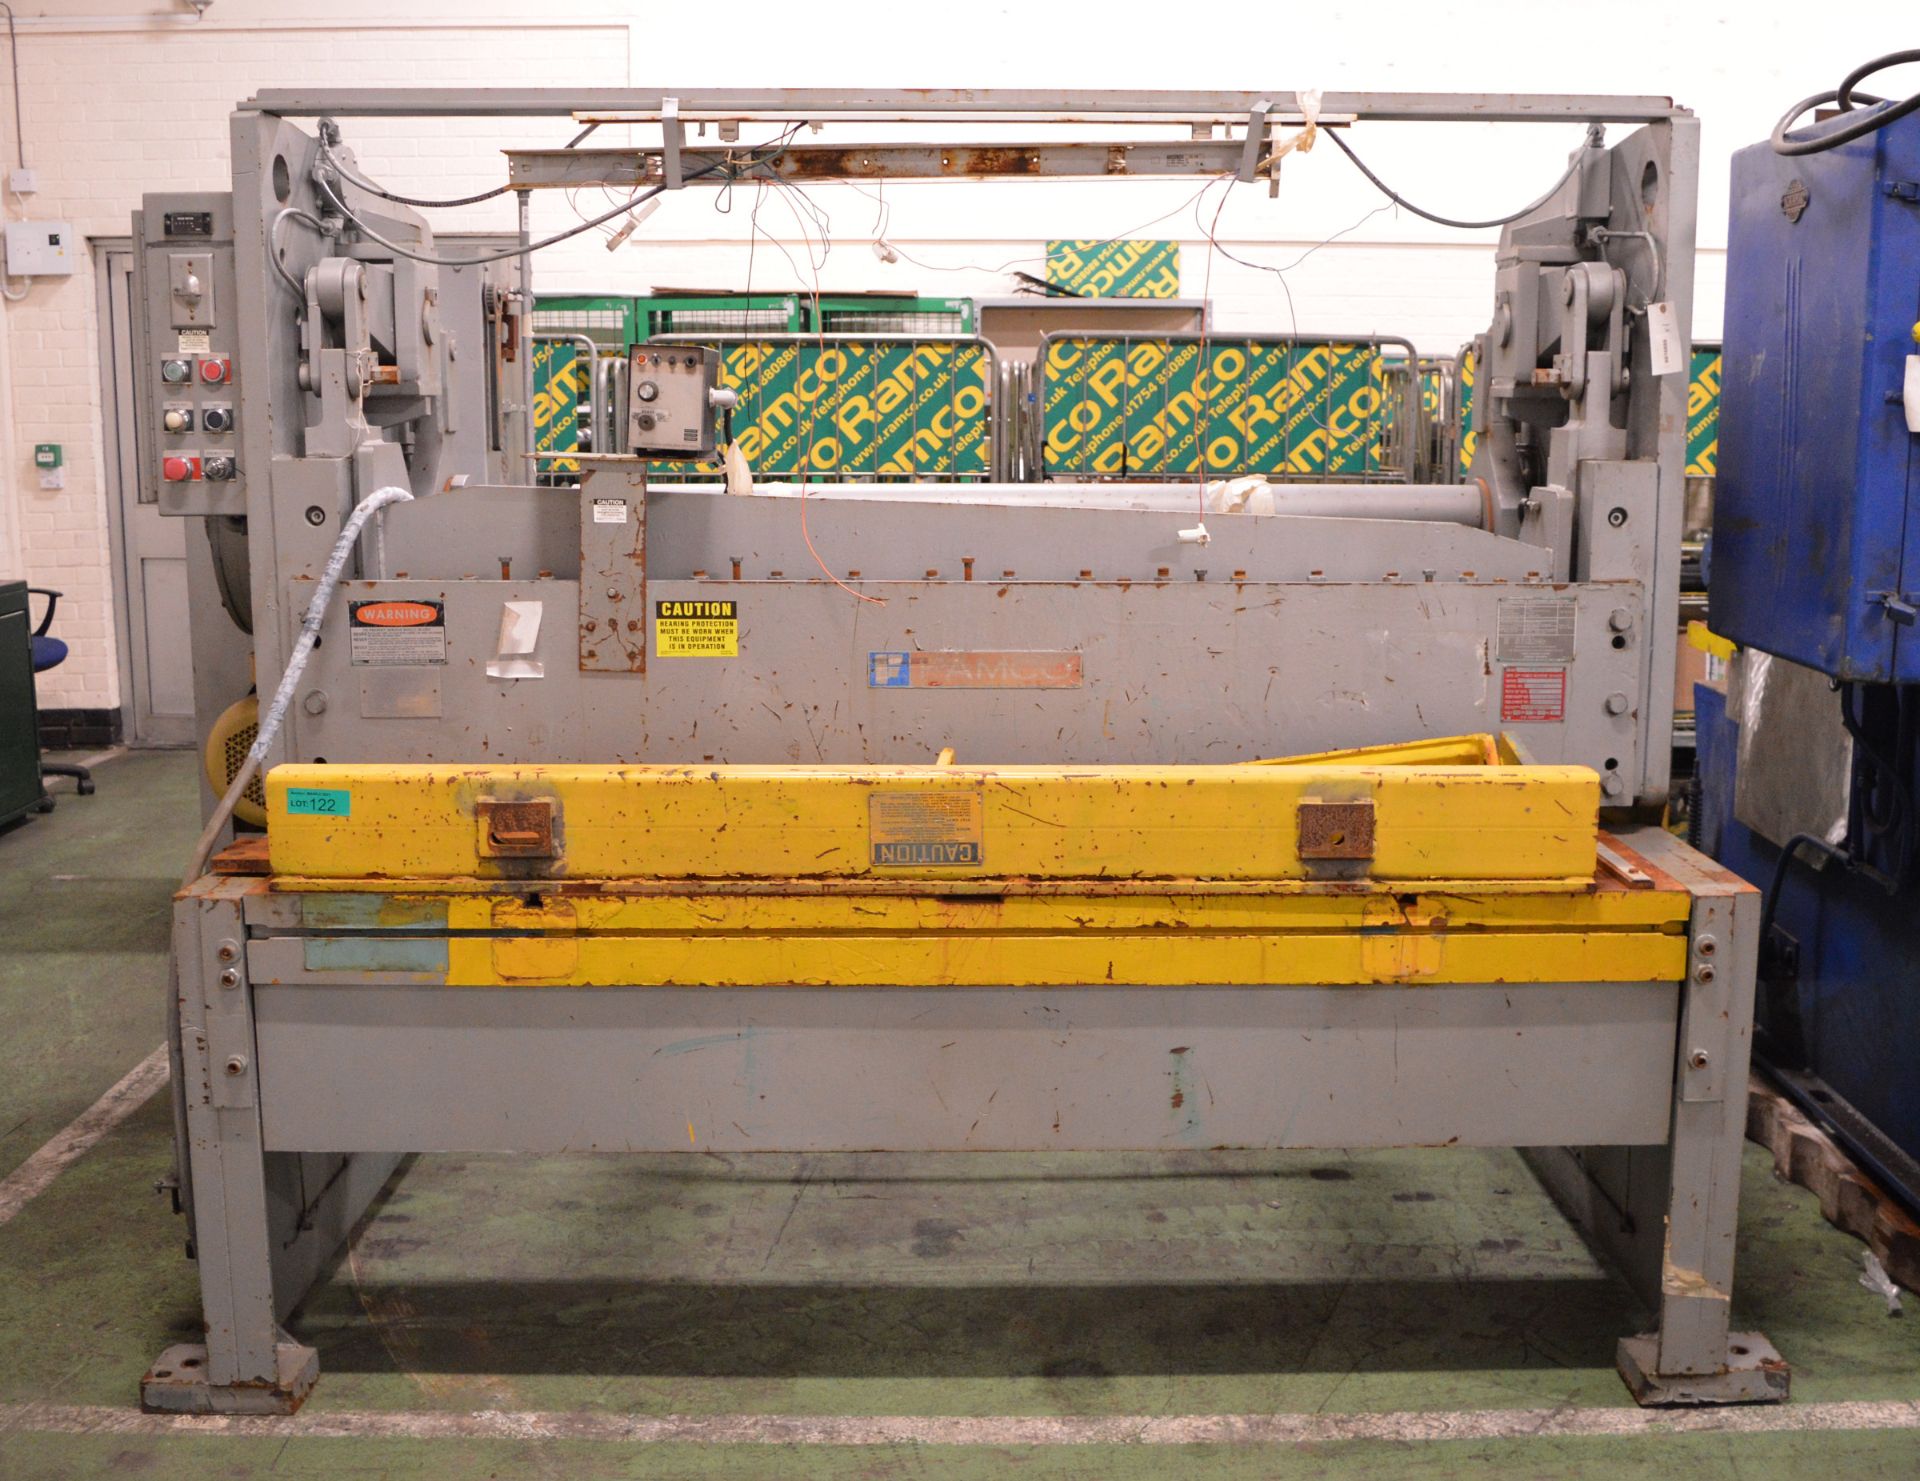 Famco powered guillotine - 2575 - serial S-12895583 - D.O.M. 12/89 - capacity 1/4 GA mild